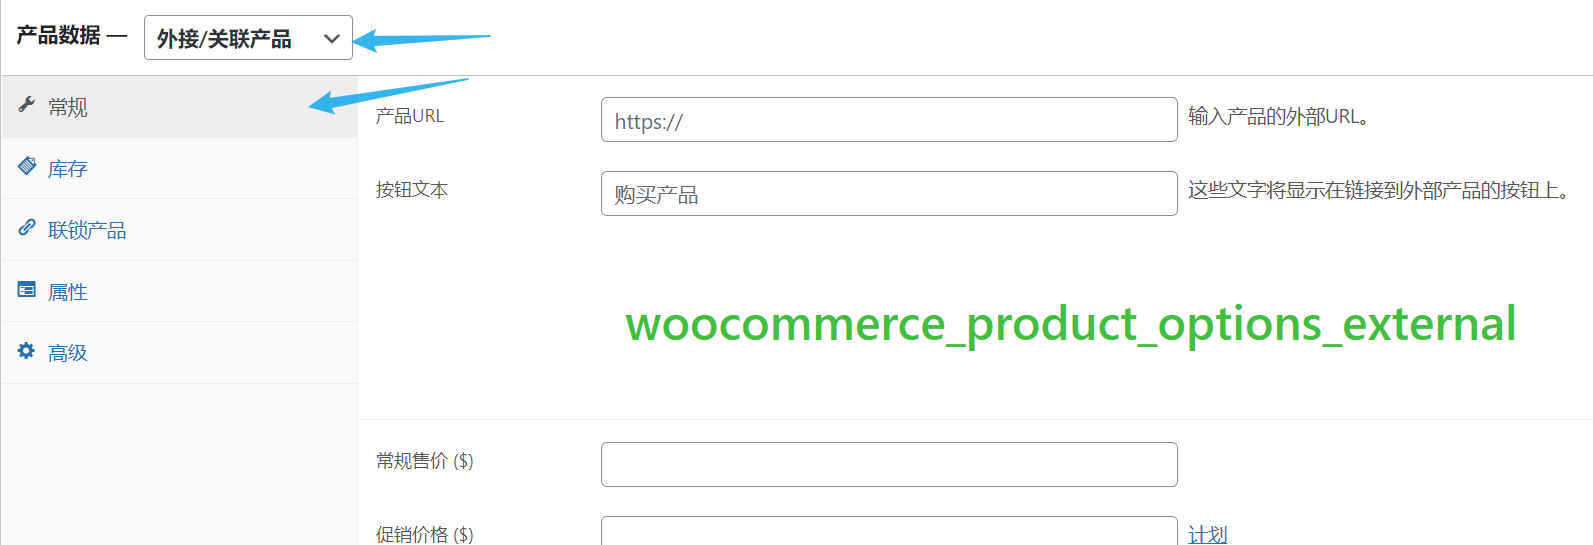 woocommerce_product_options_external